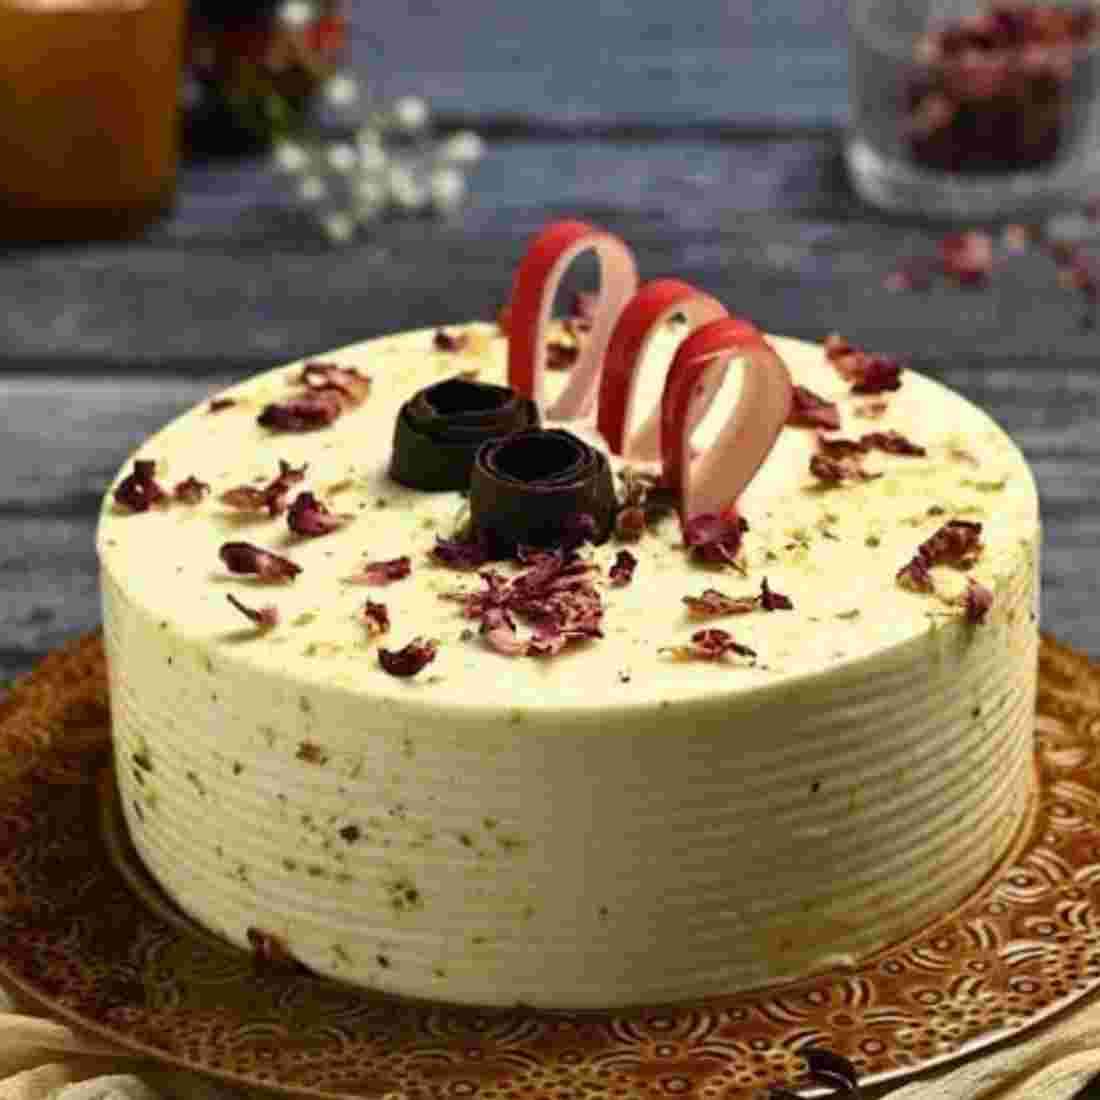 Royal kulfi falooda cake - Takku's Cake Delight | Facebook